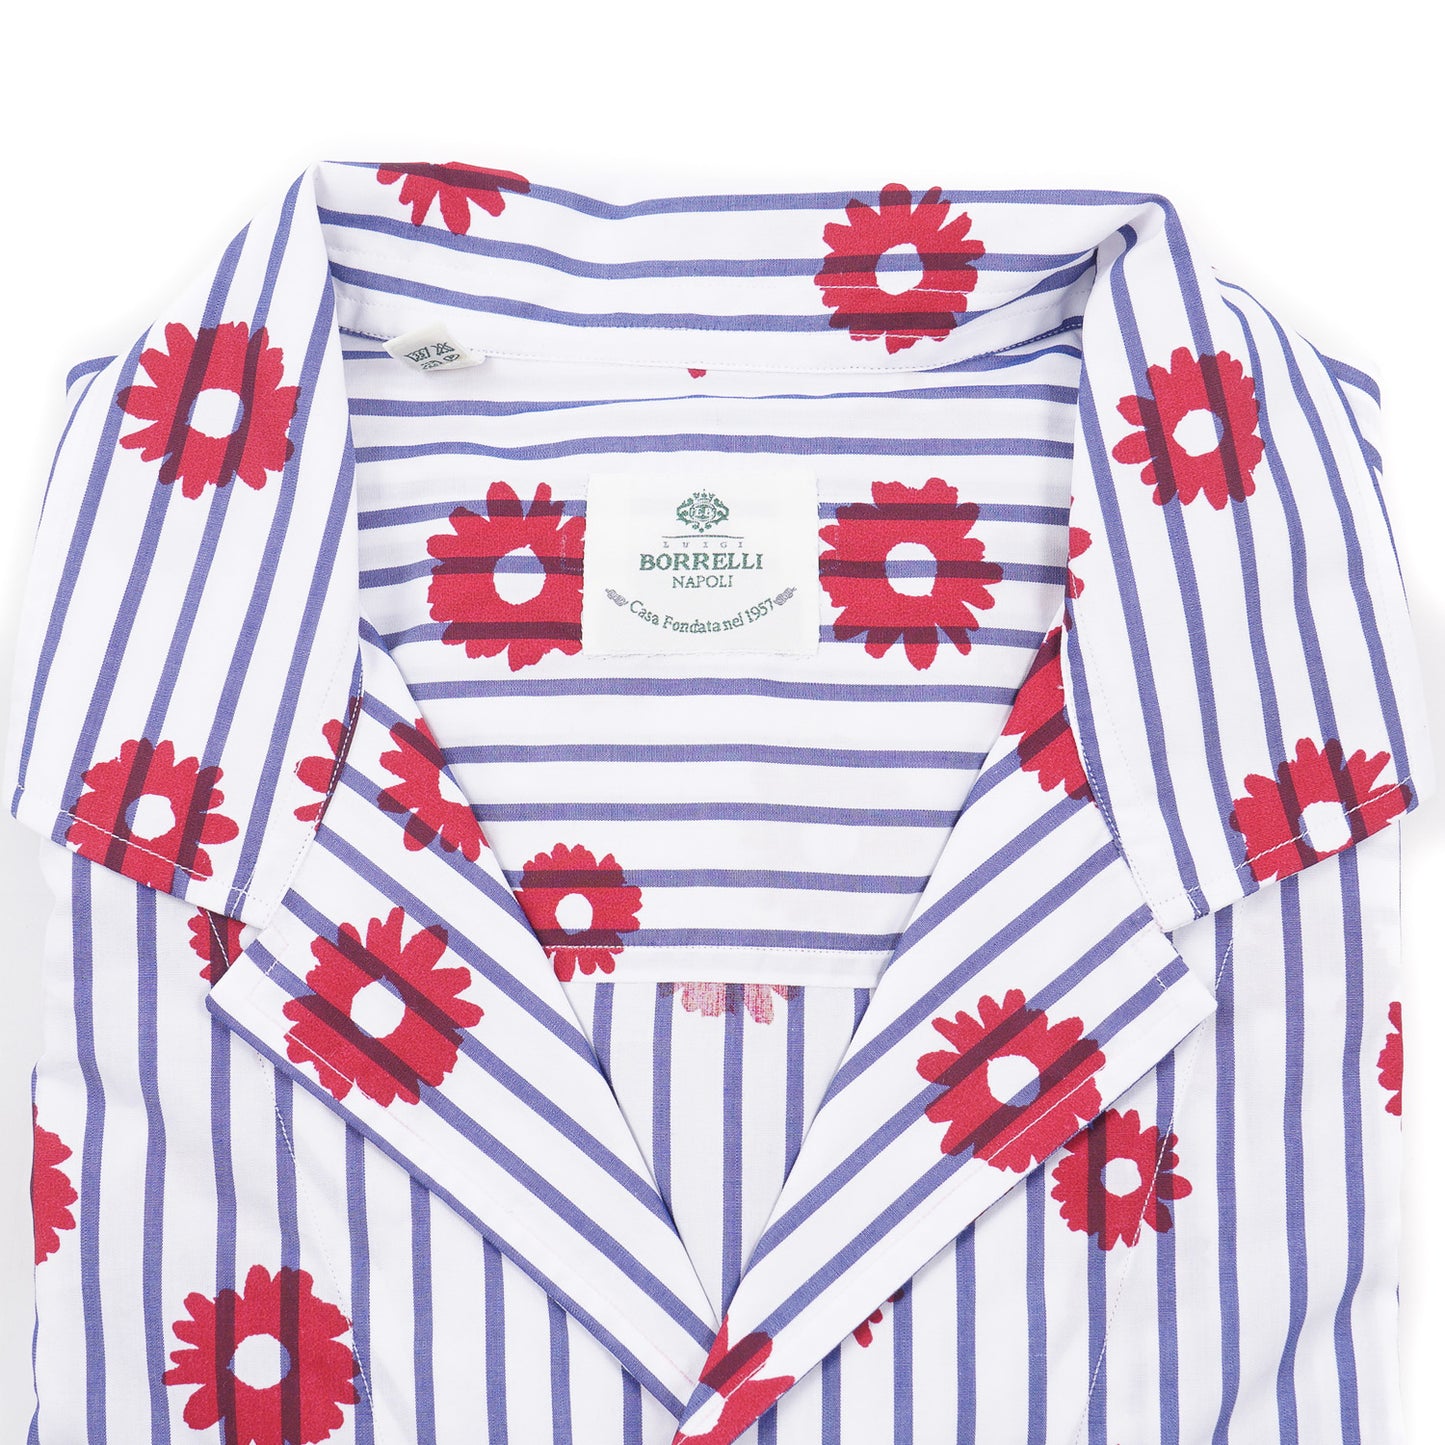 Luigi Borrelli Tropical Floral Cotton Shirt - Top Shelf Apparel